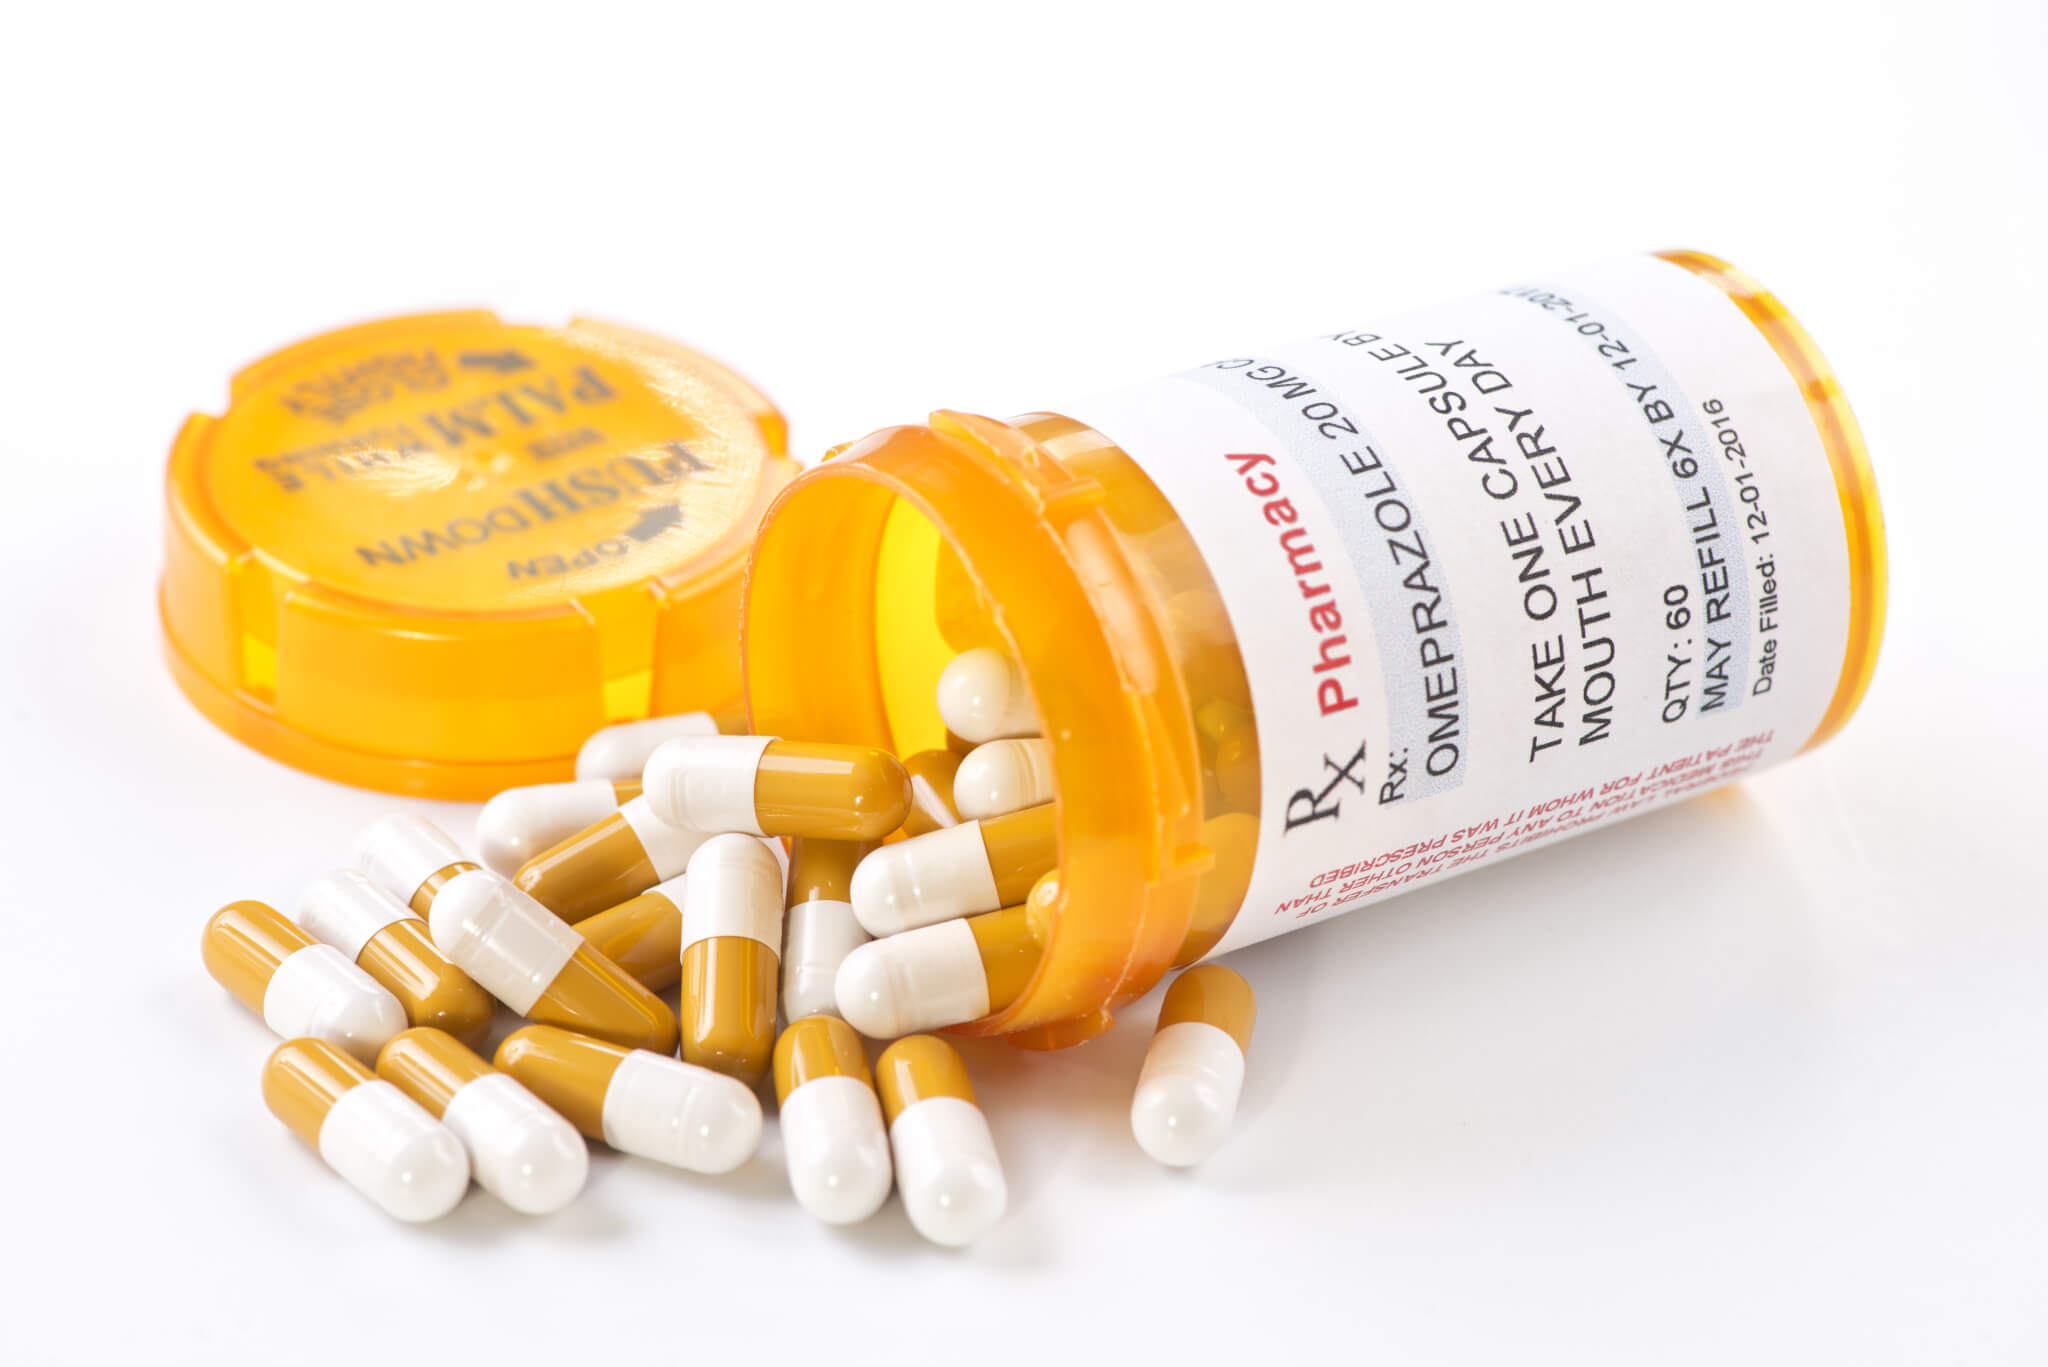 Omeprazole - medication for heartburn or acid reflux